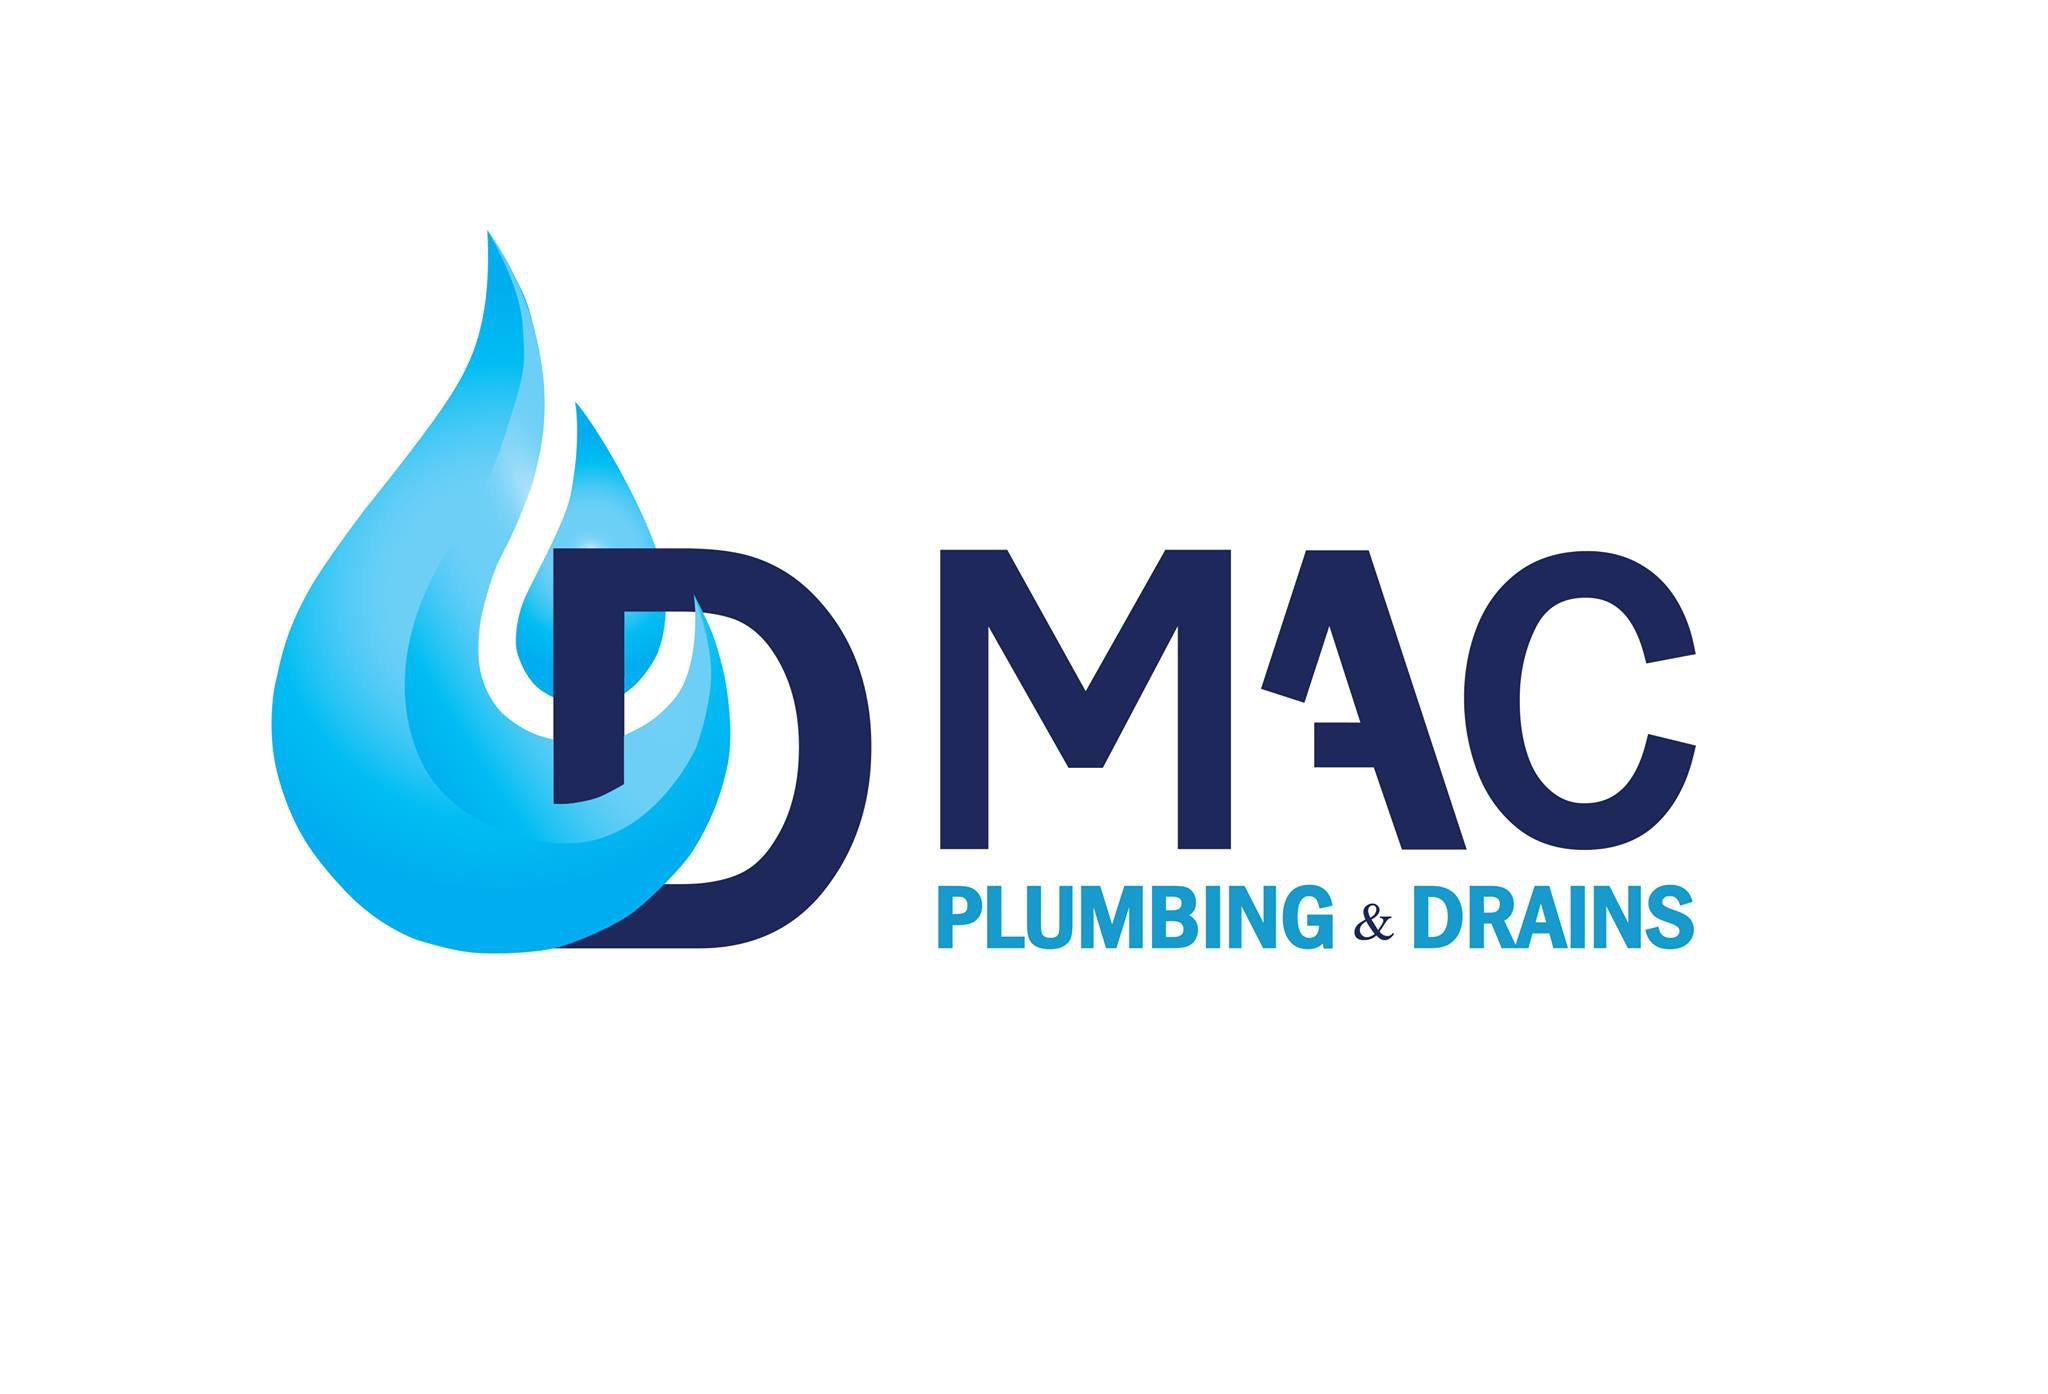 D Mac Plumbing&Drains's logo